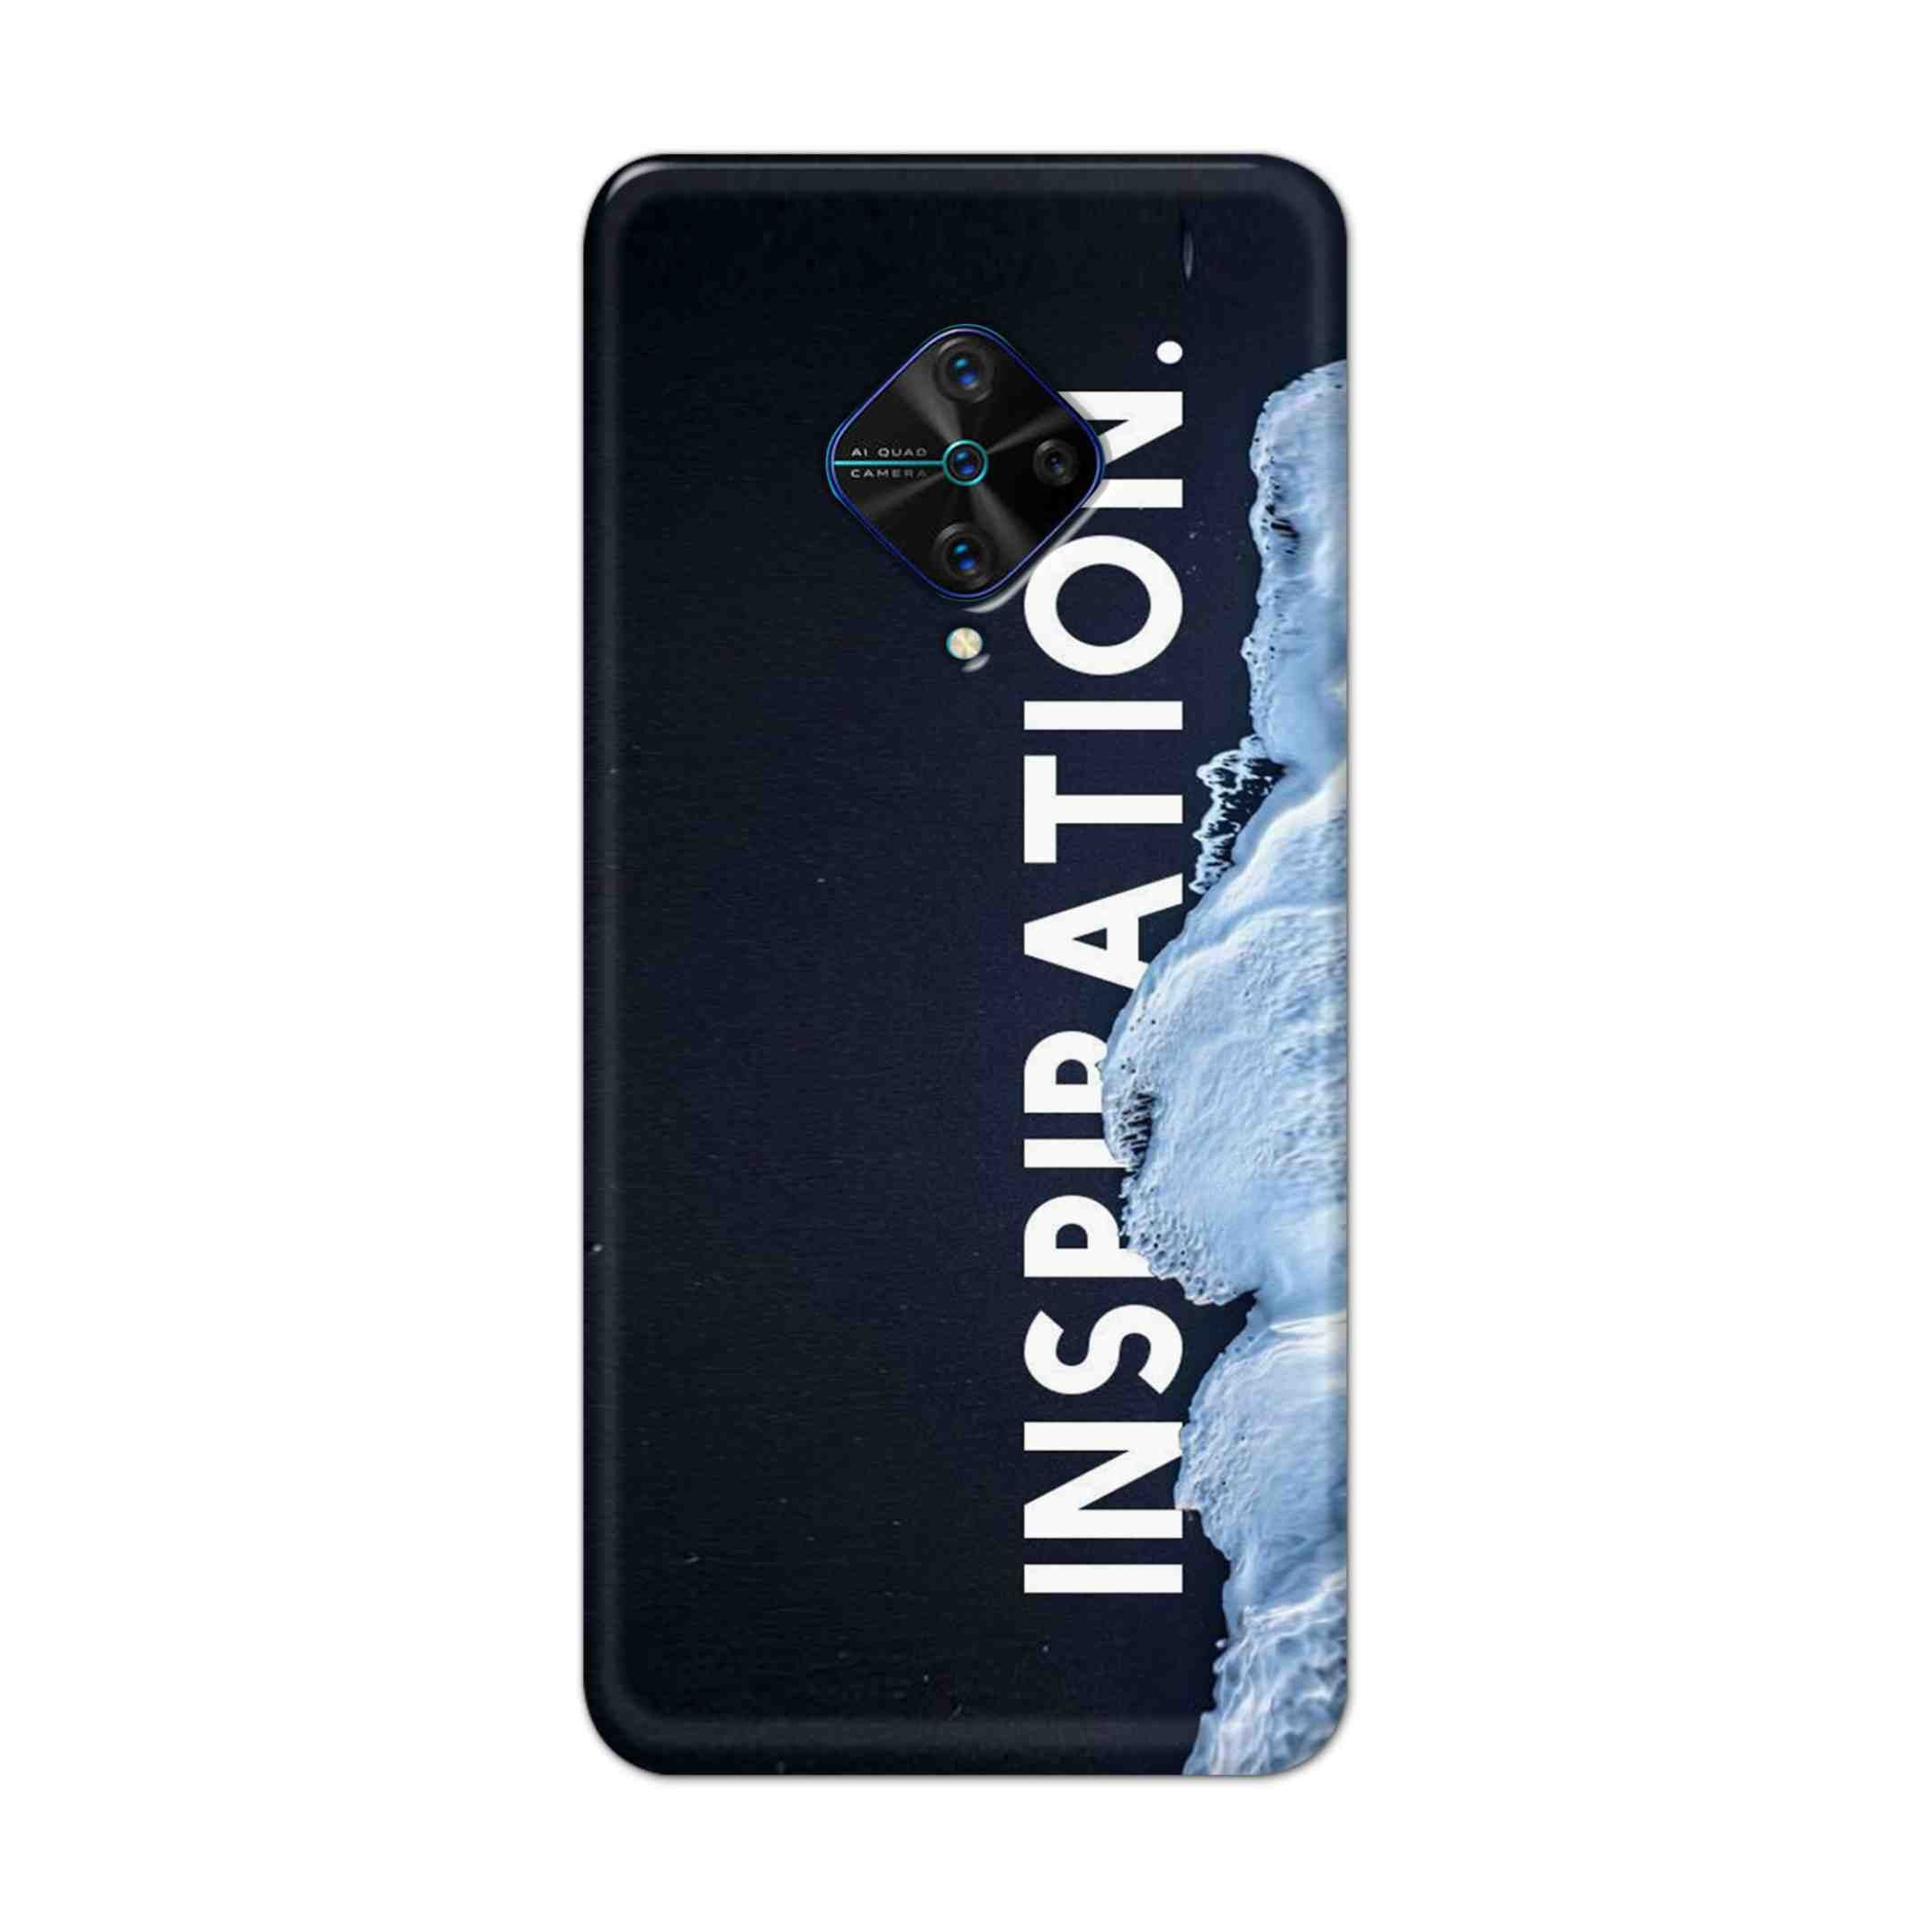 Buy Inspiration Hard Back Mobile Phone Case Cover For Vivo S1 Pro Online